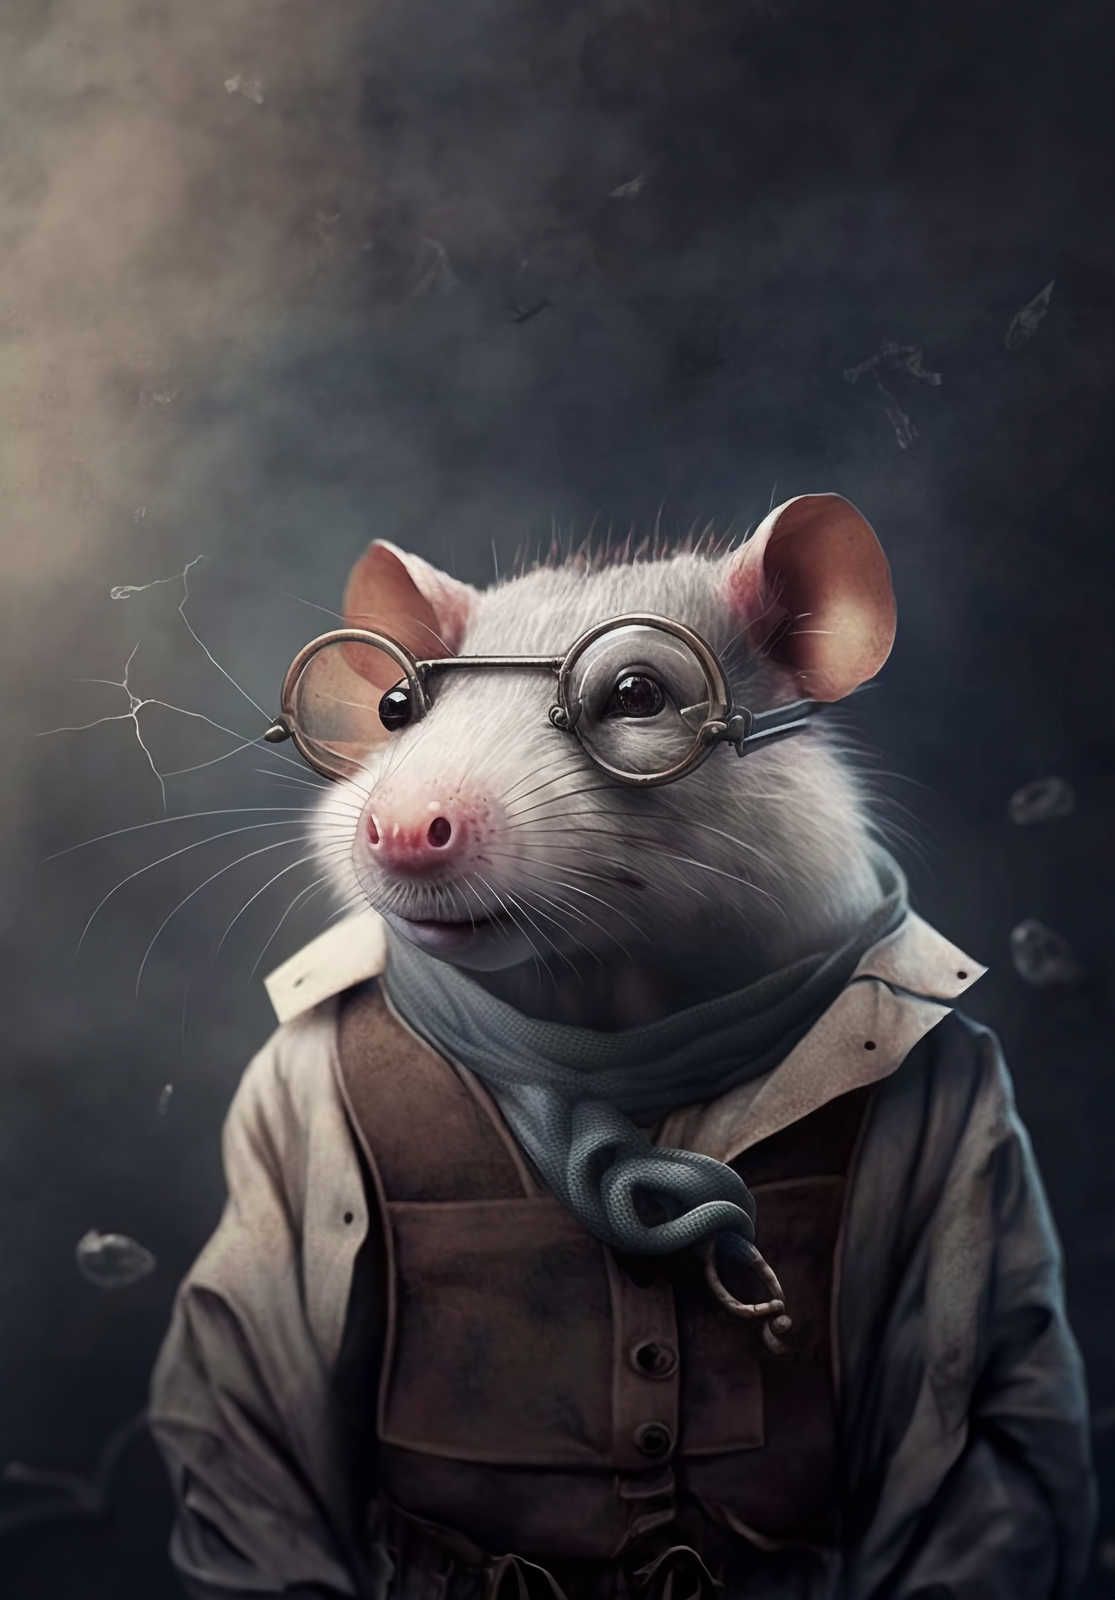             AI canvas picture »scientific rat« - 60 cm x 90 cm
        